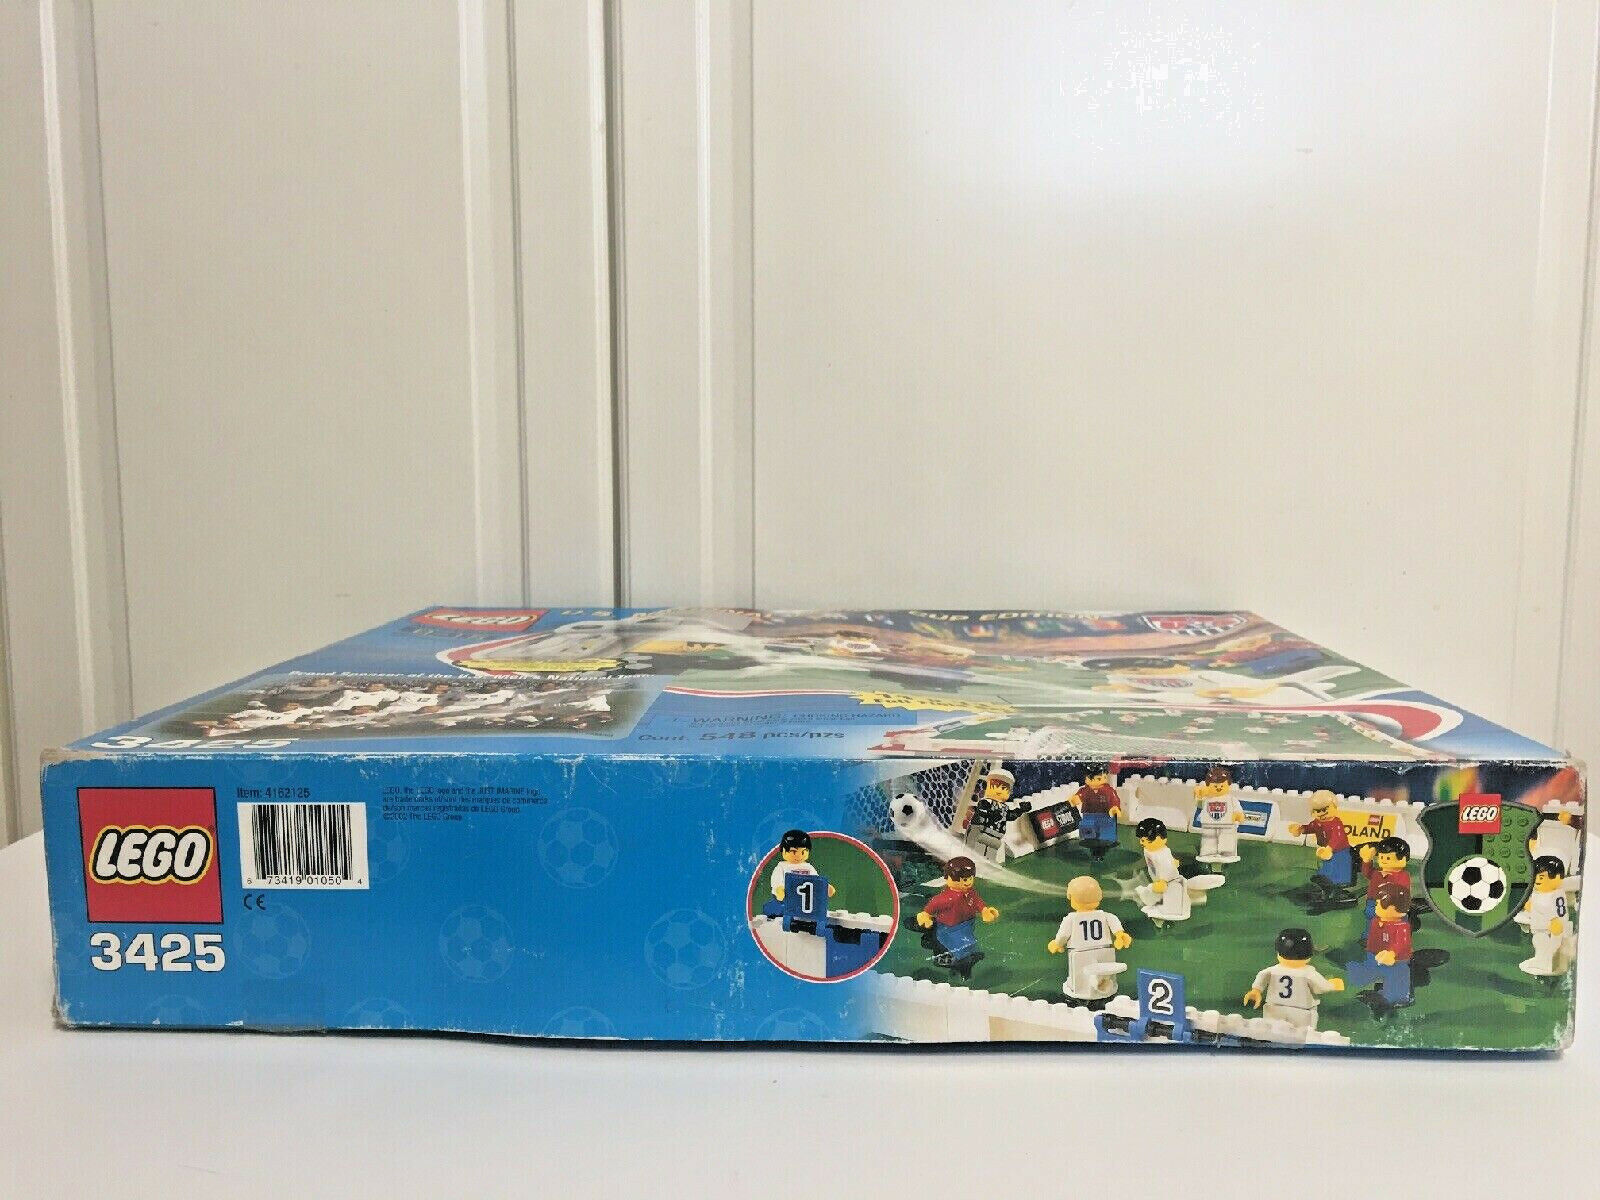 U.S. National Team Cup Edition Lego Set w/ Box [VINTAGE]